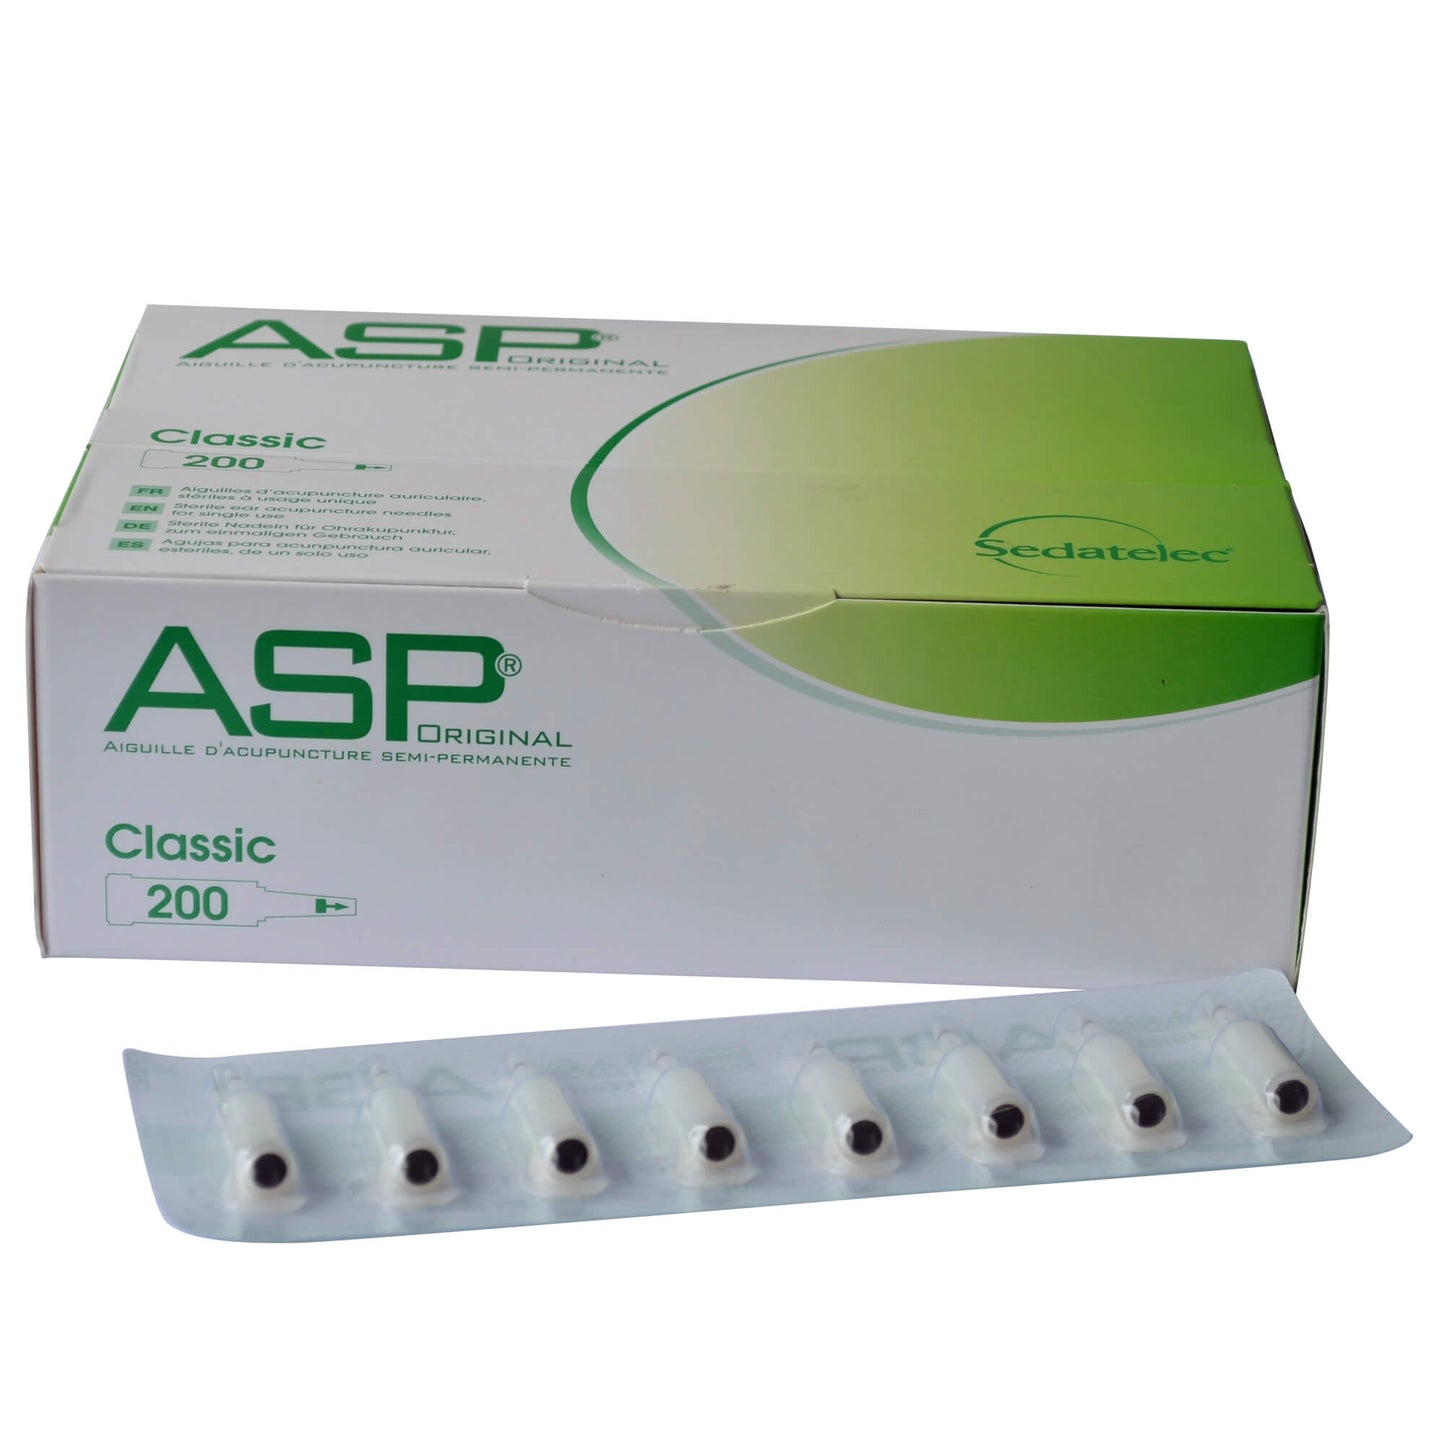 ASP Classic 200 auriculaire